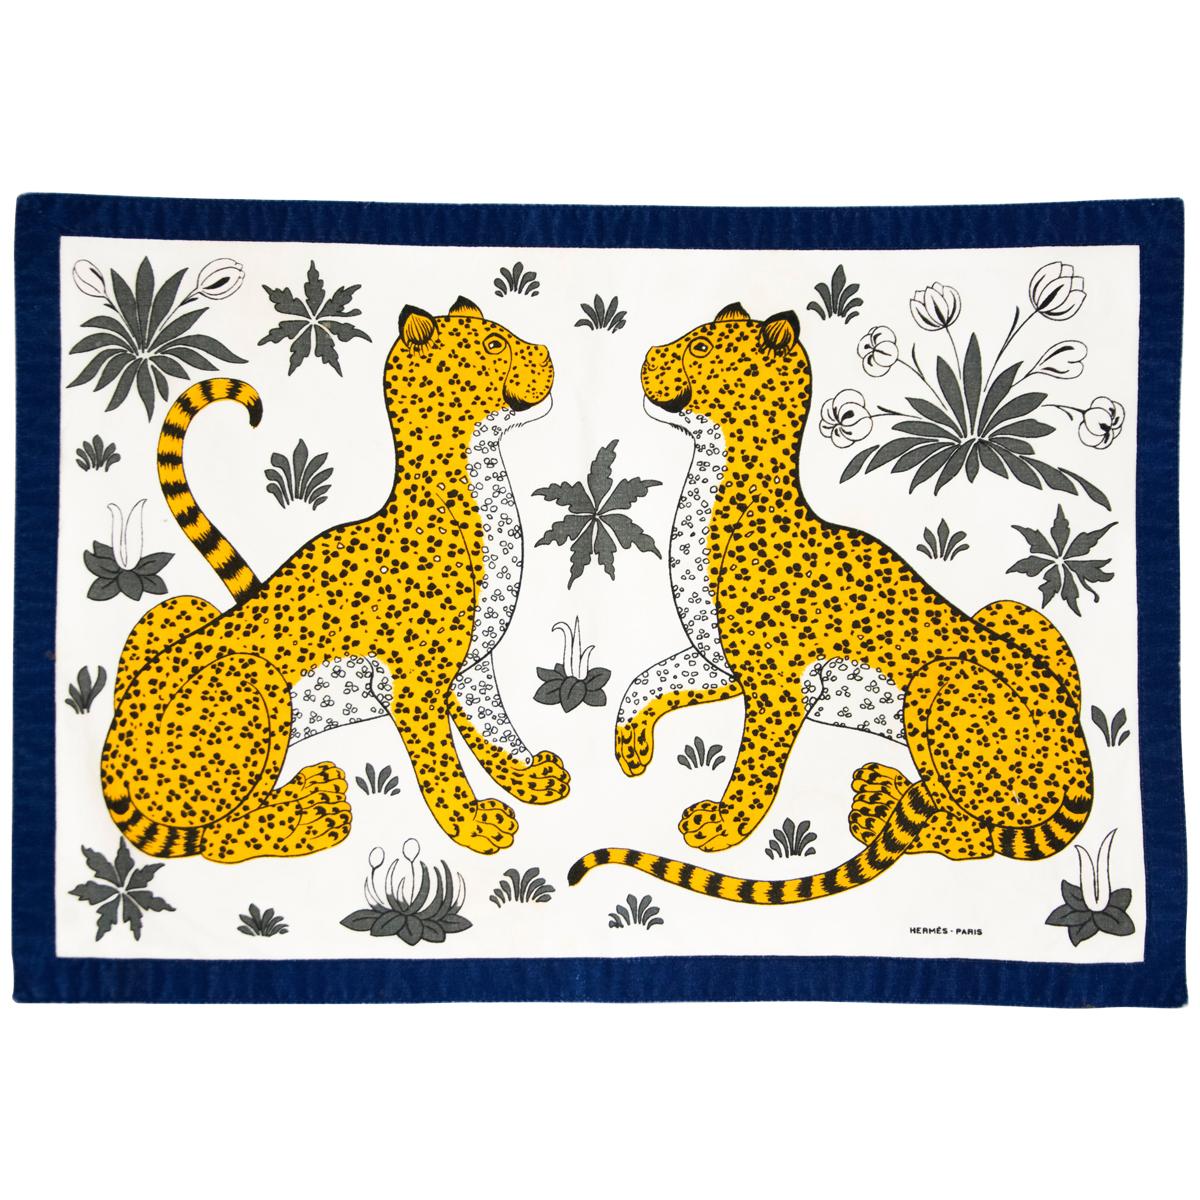 Hermès rare cheetah placemats, 80s For Sale